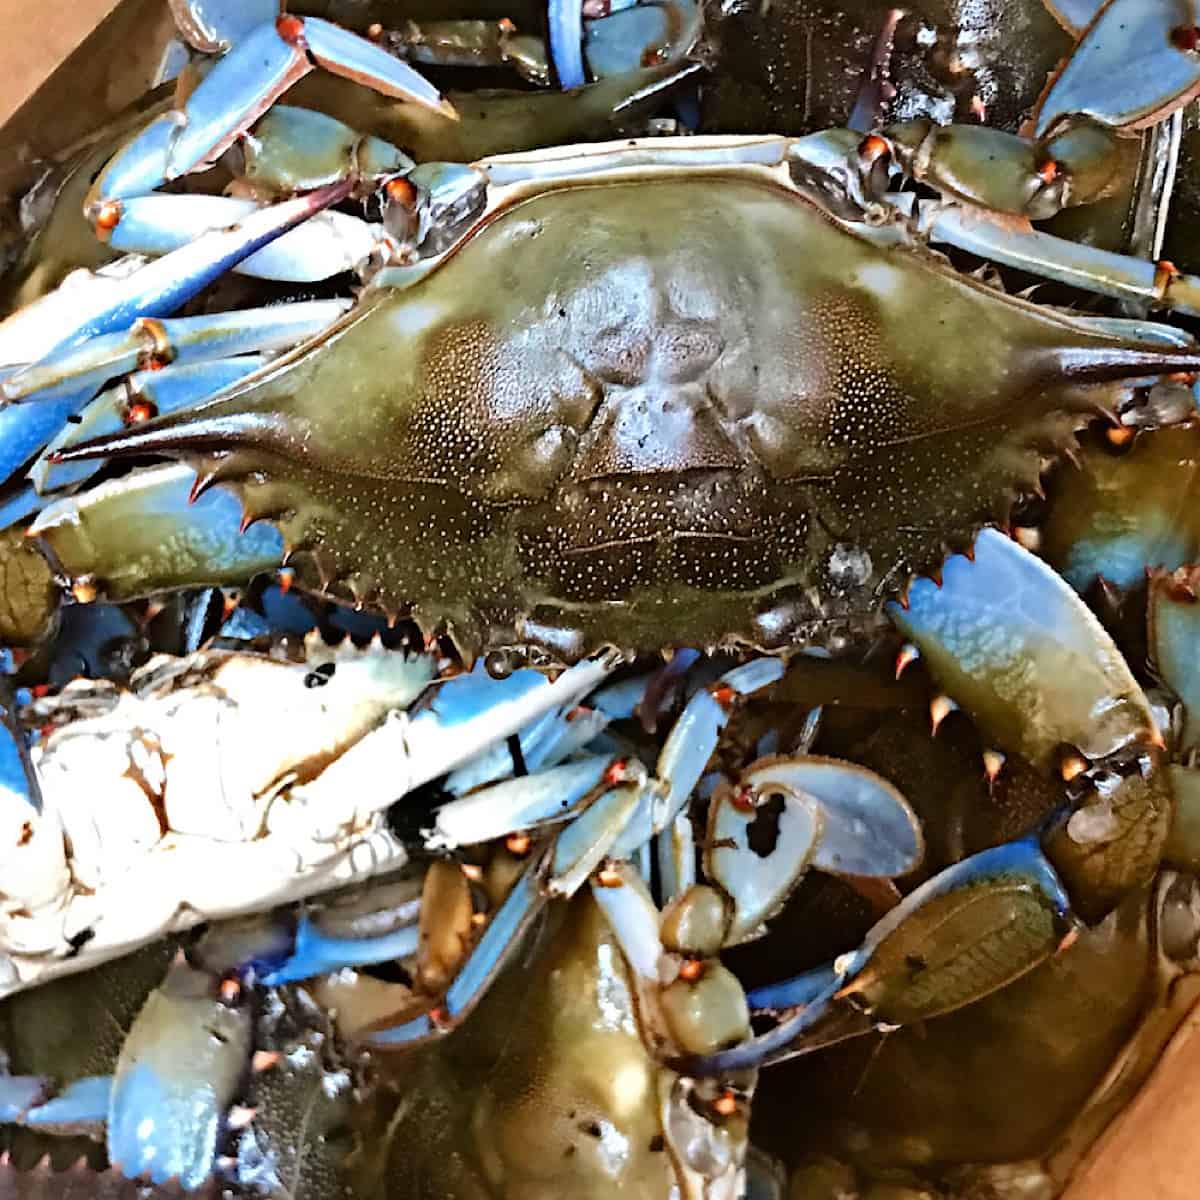 Live blue crabs